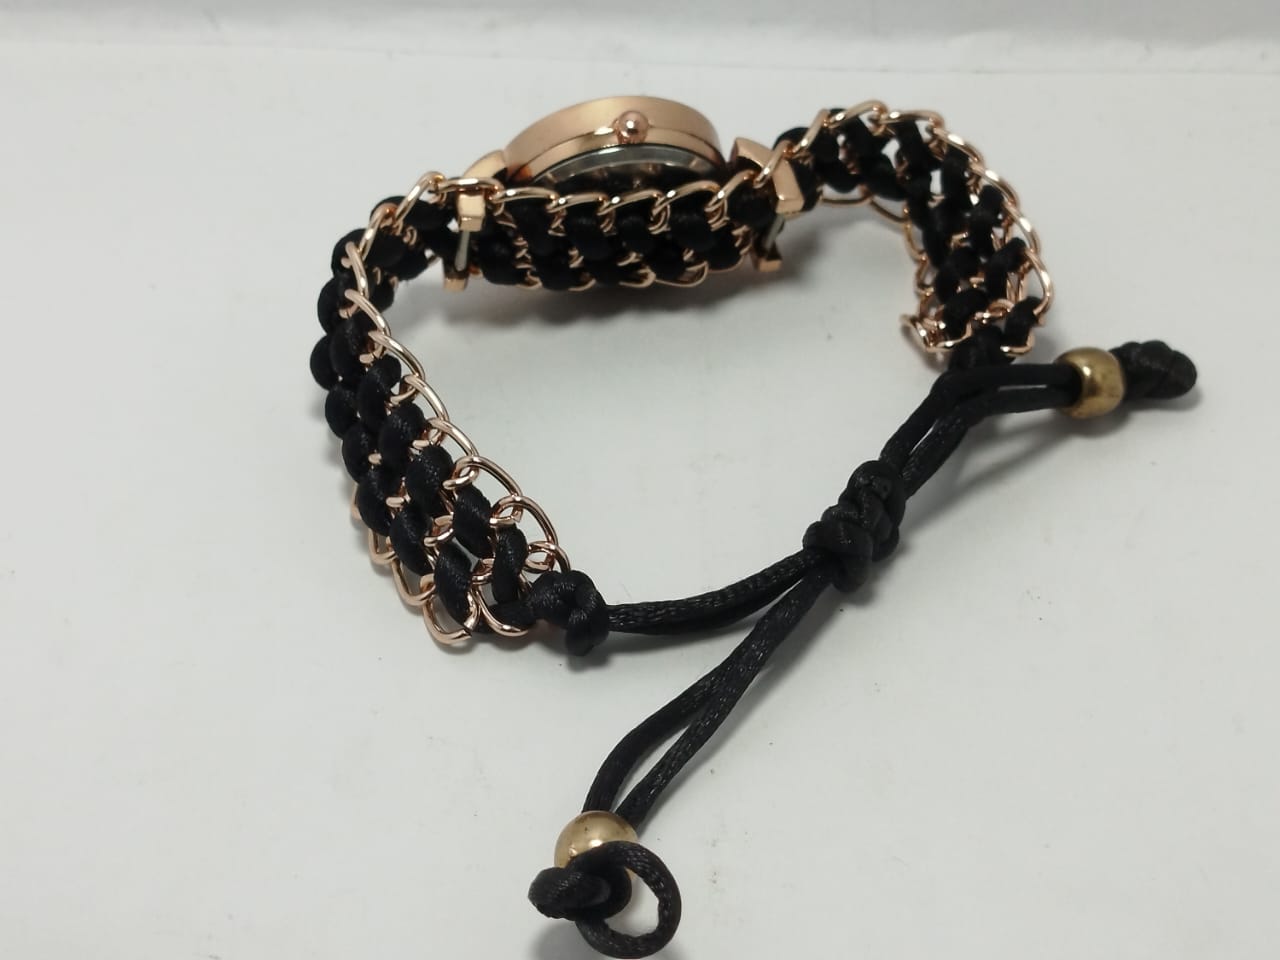 Golden Bracelet With Black Ribbon Watch For Women